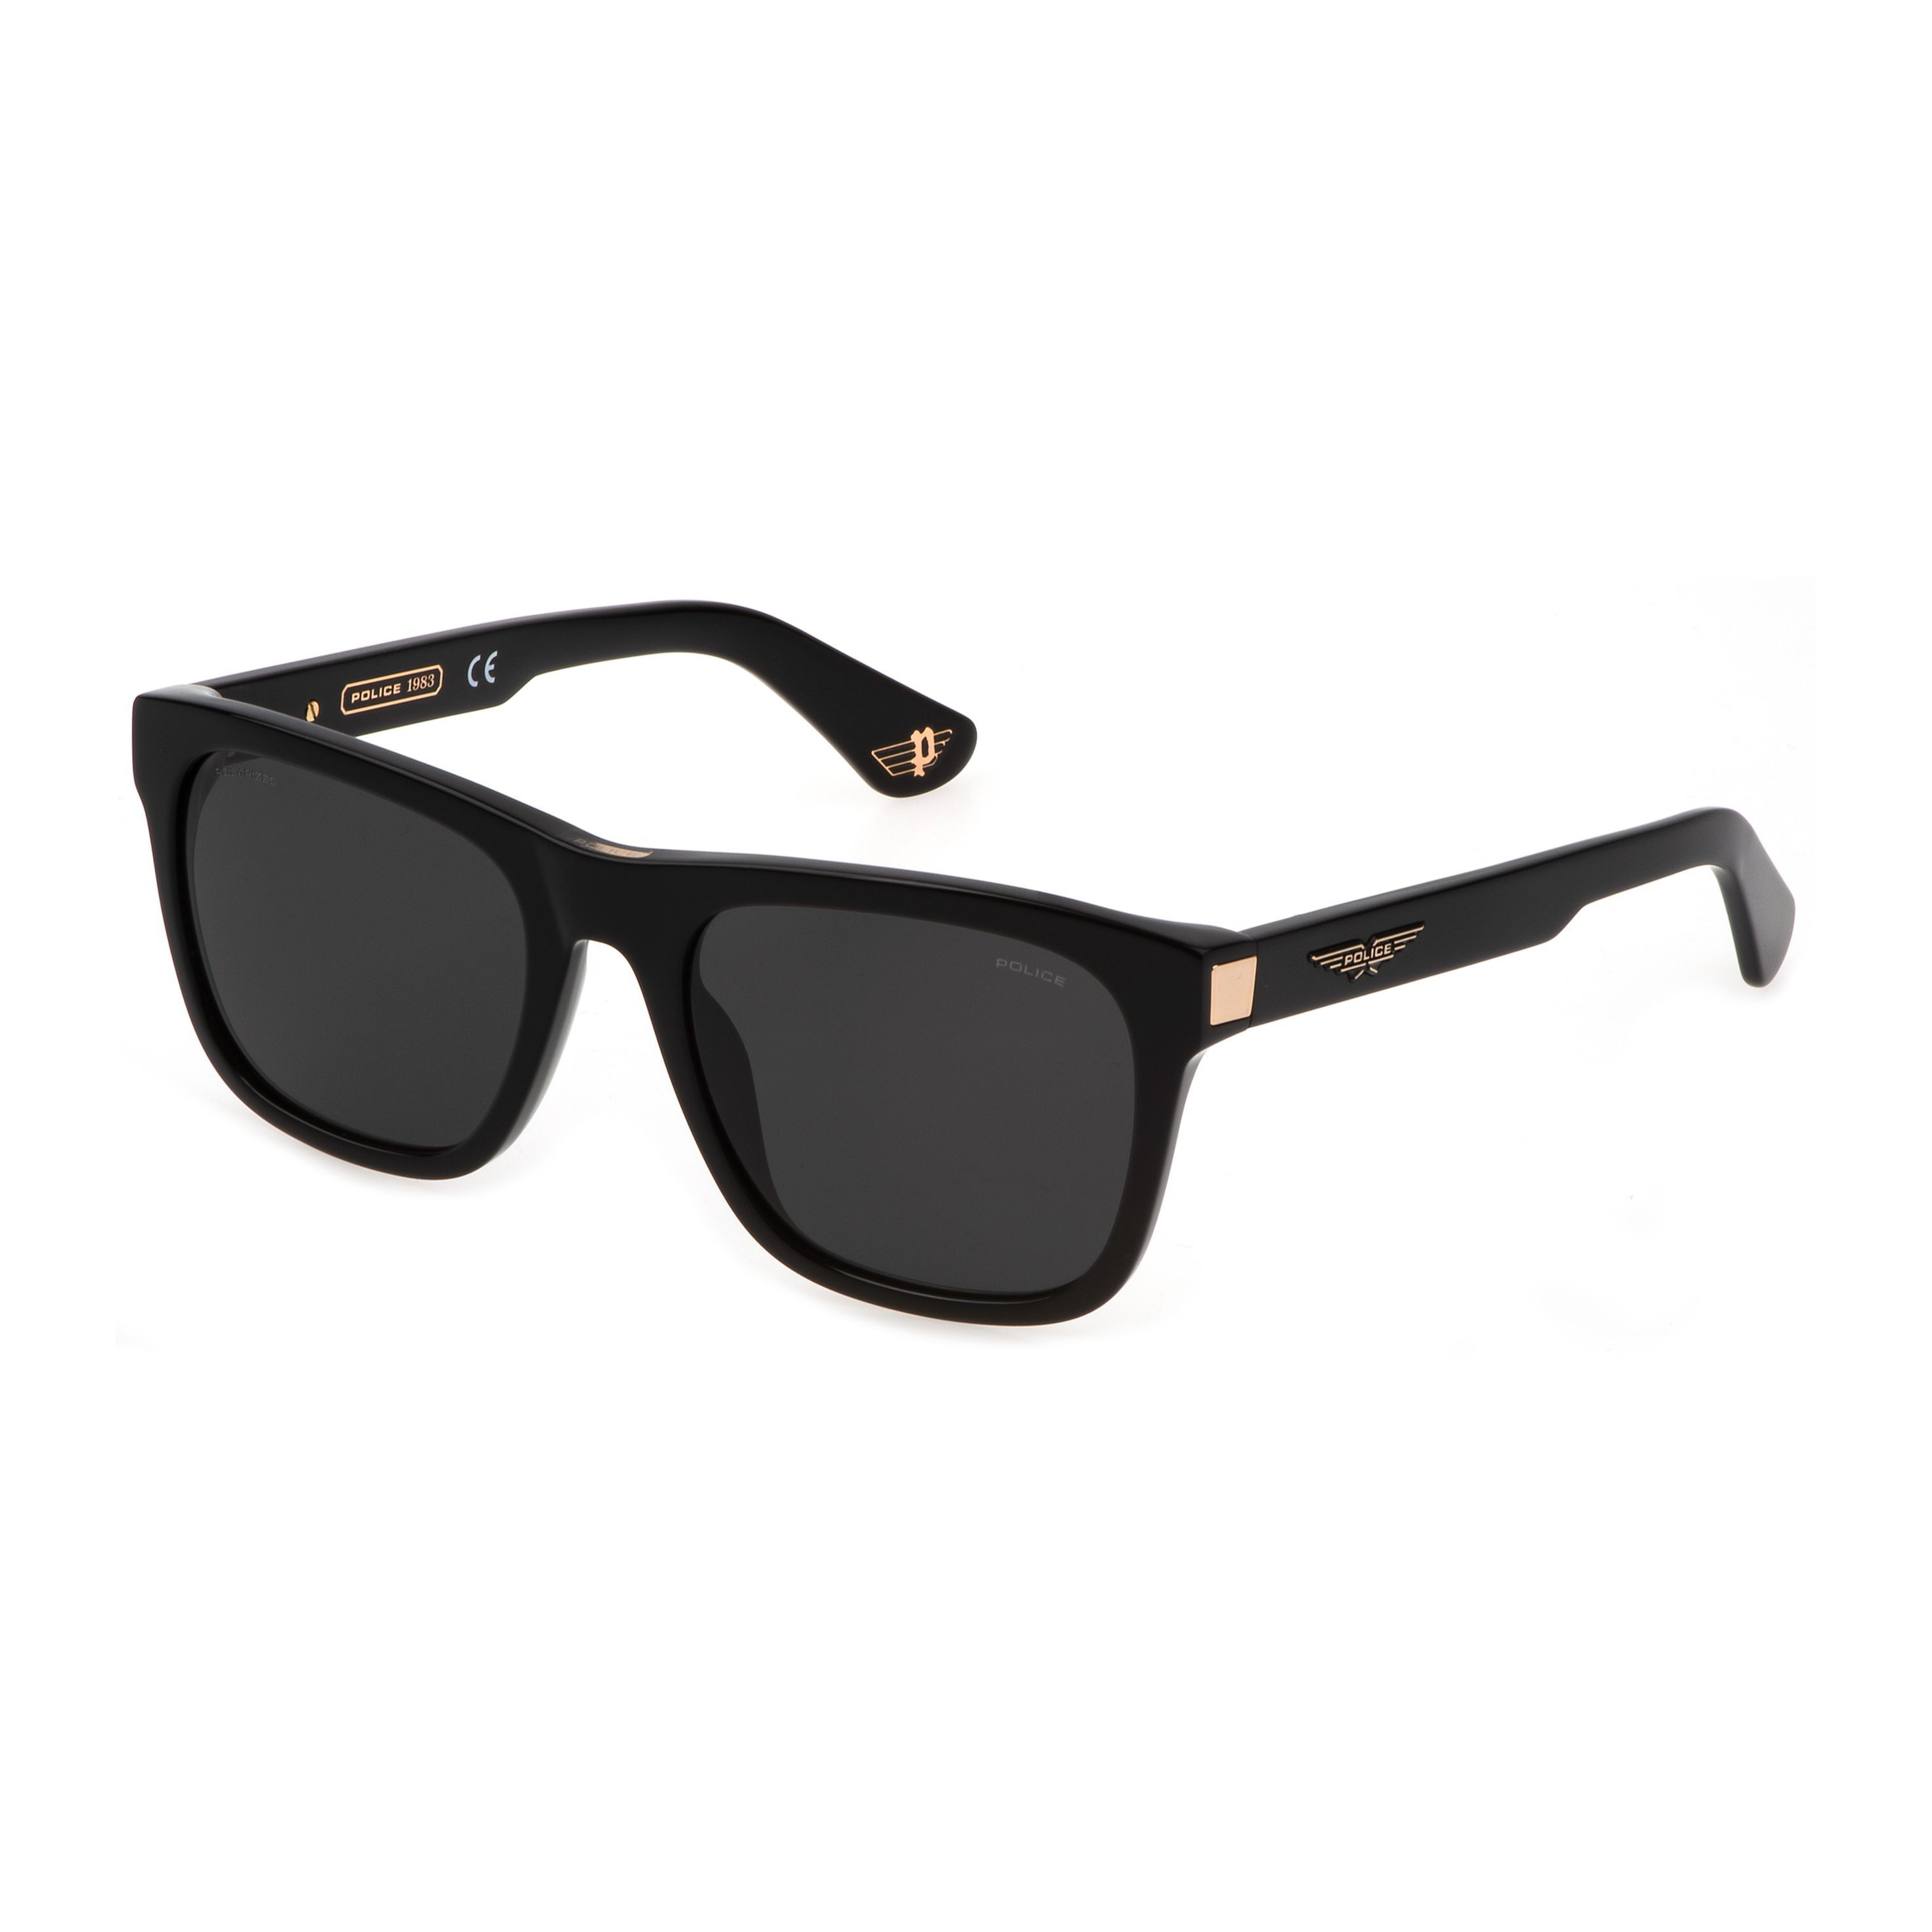 SPLE37M Square Sunglasses 700P - size 56